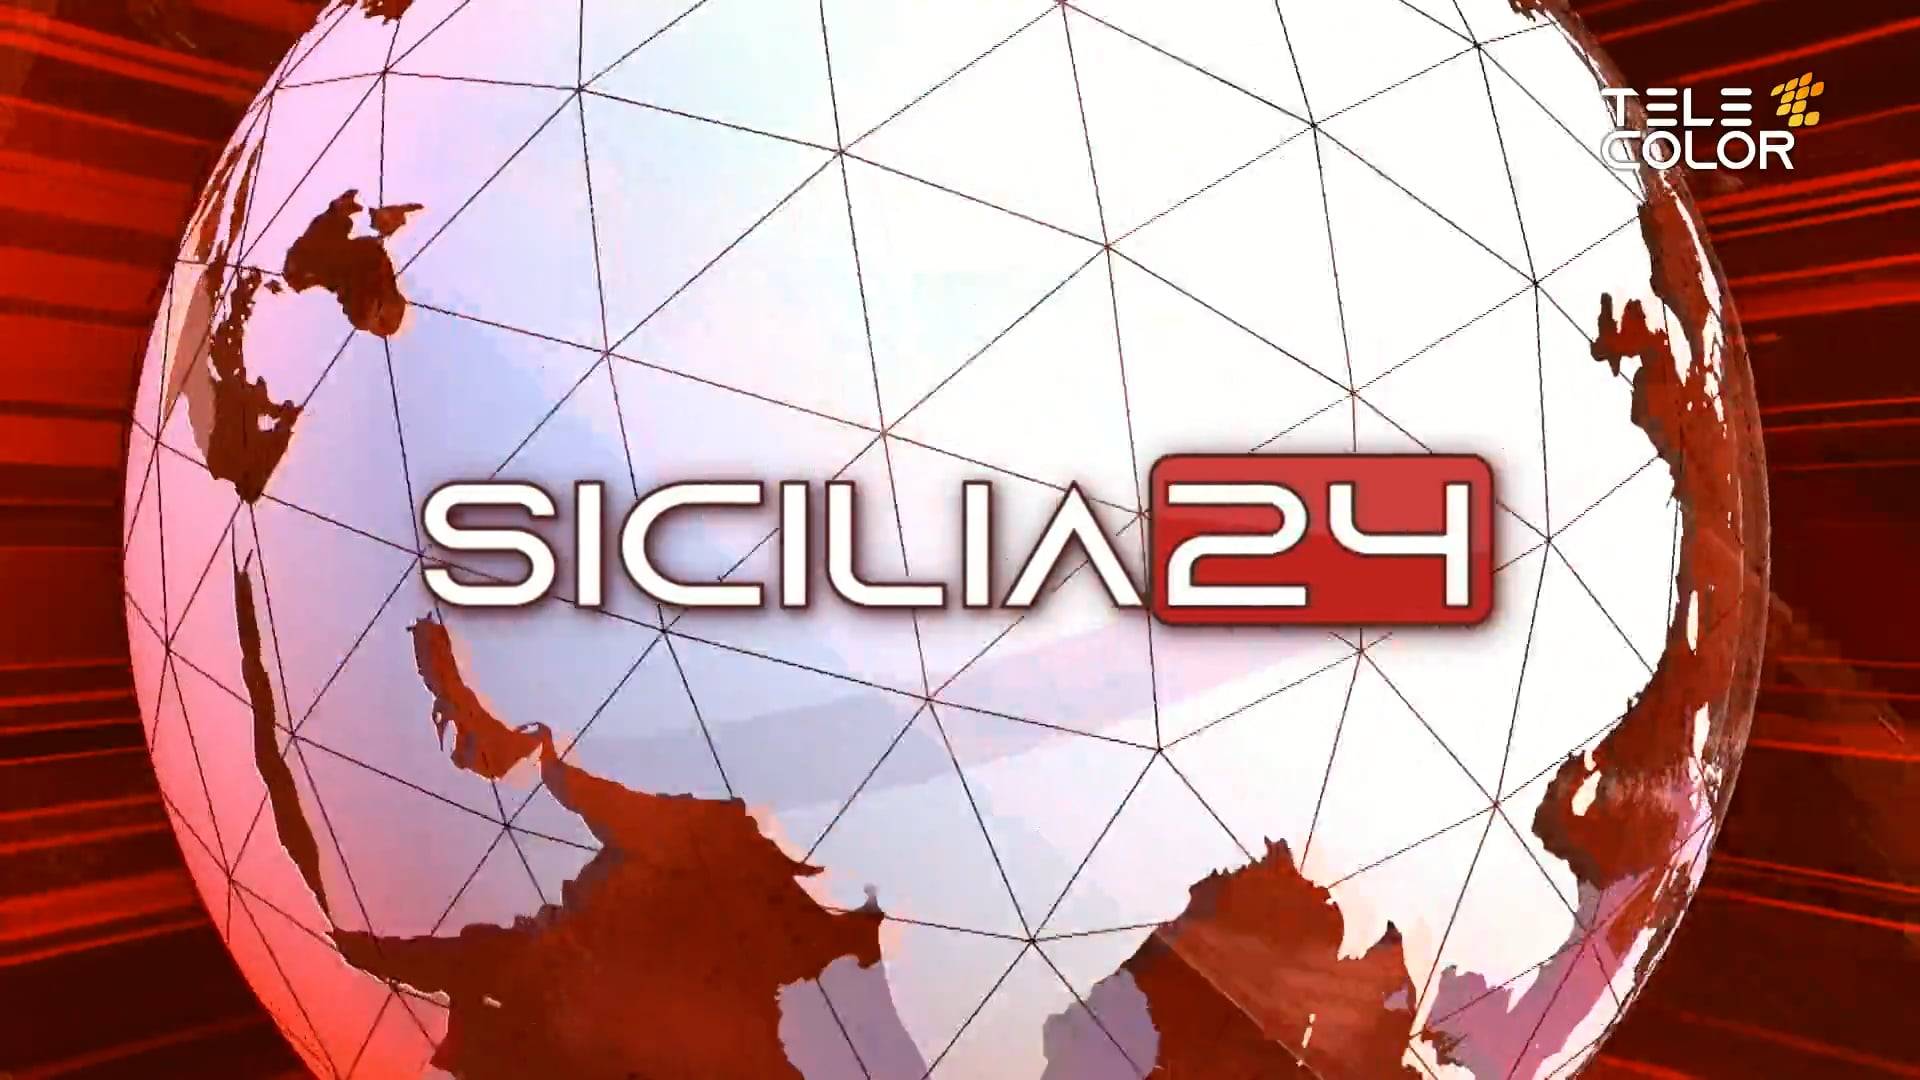 sicilia24-21-marzo-2023-ore-19-vimeo-thumbnail.jpg